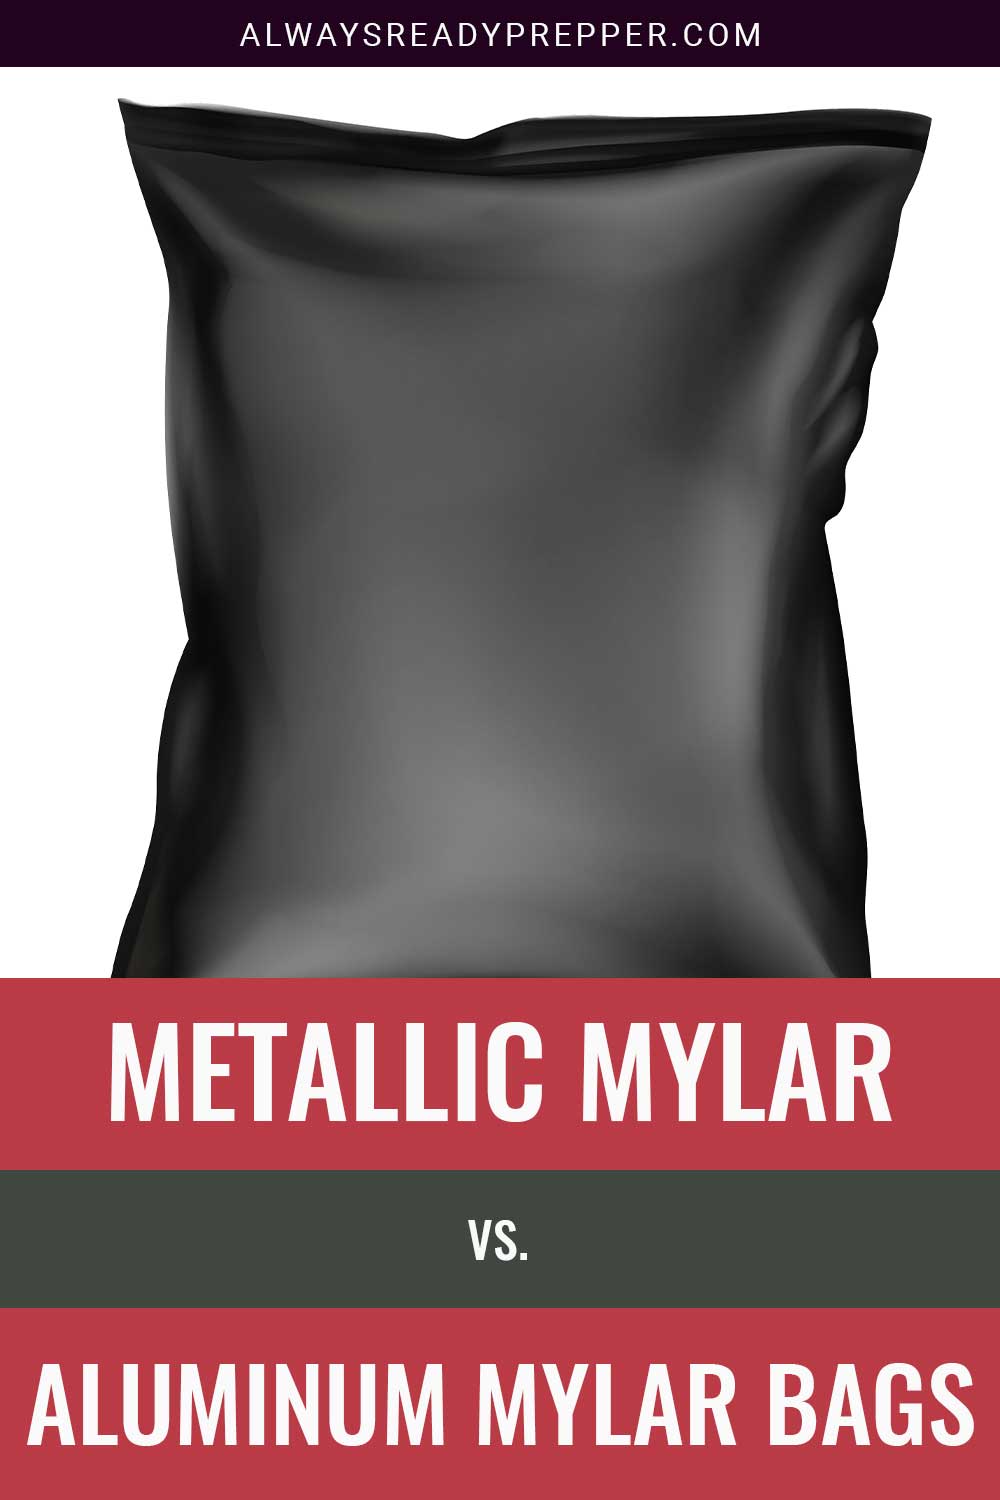 A black mylar bag - Metallic Mylar vs. Aluminum Mylar Bags.